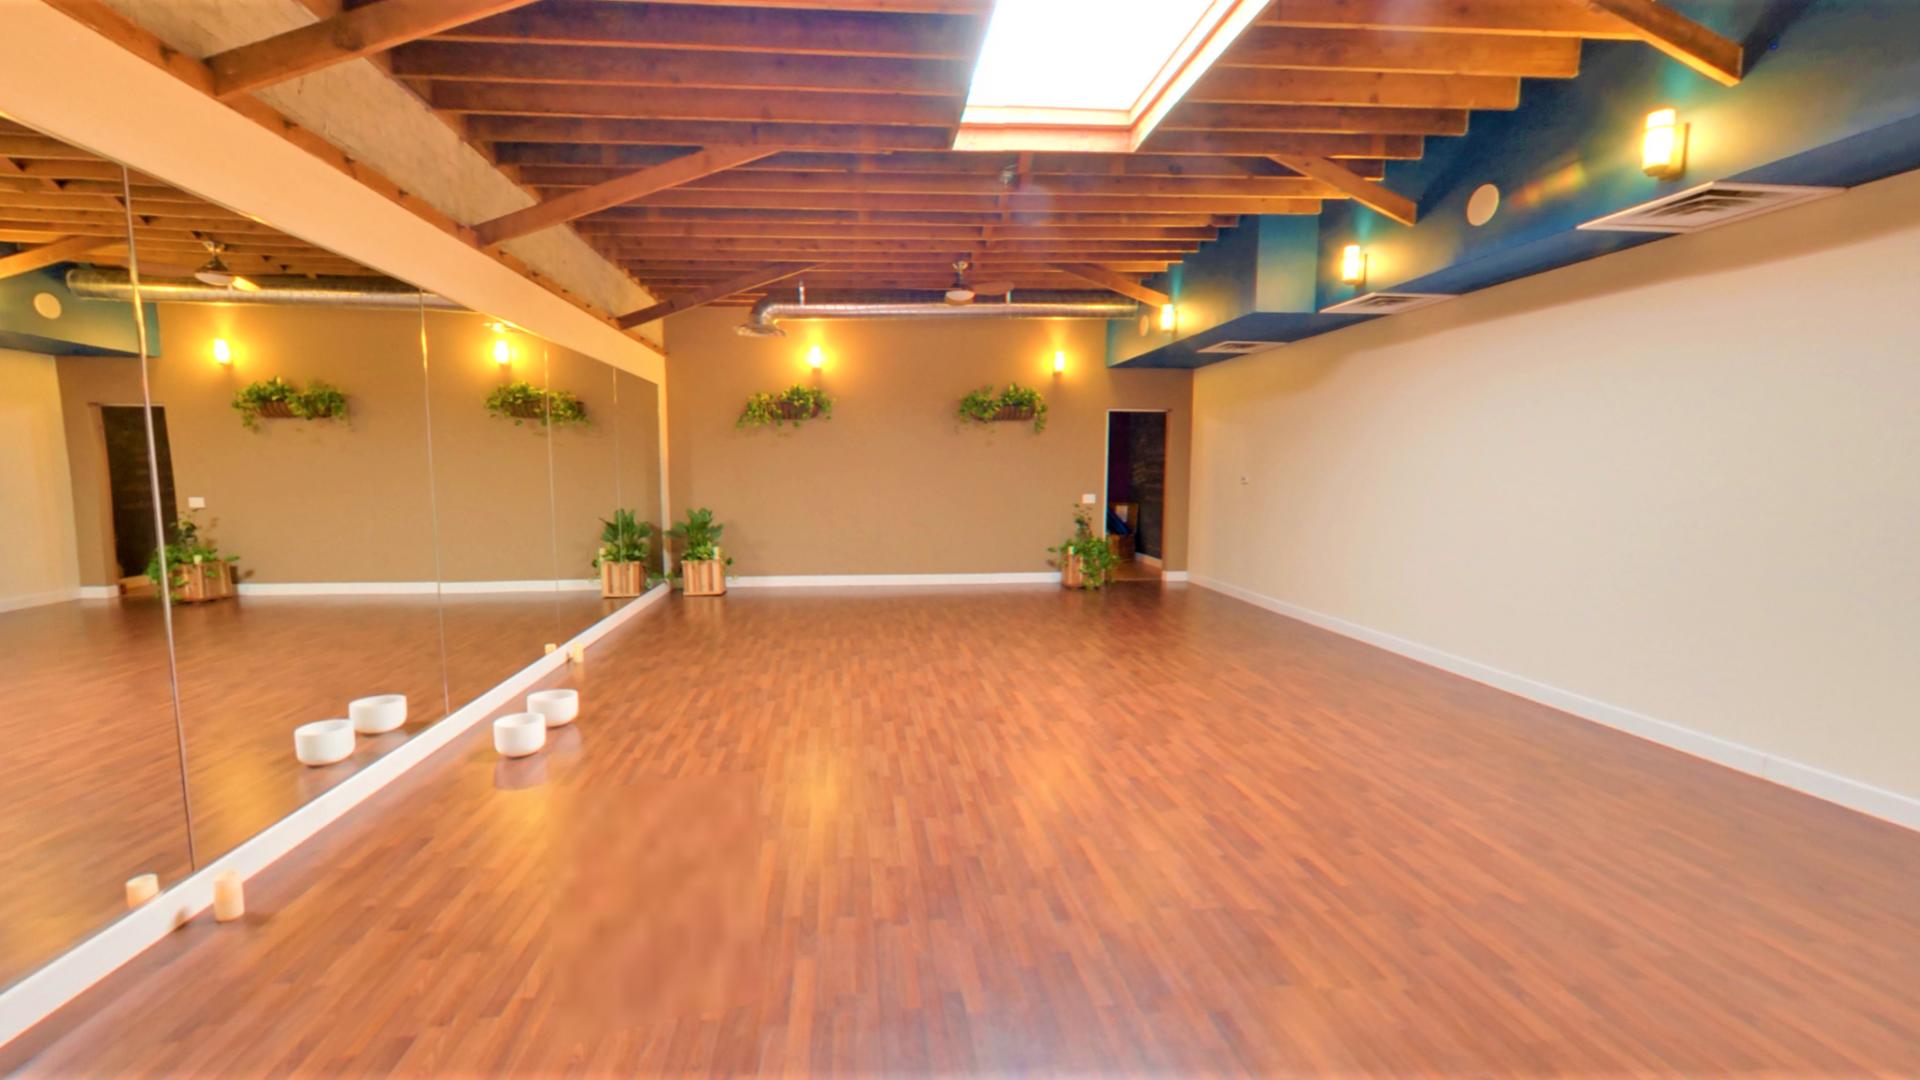 Dance Studios for Rent in San Diego, CA